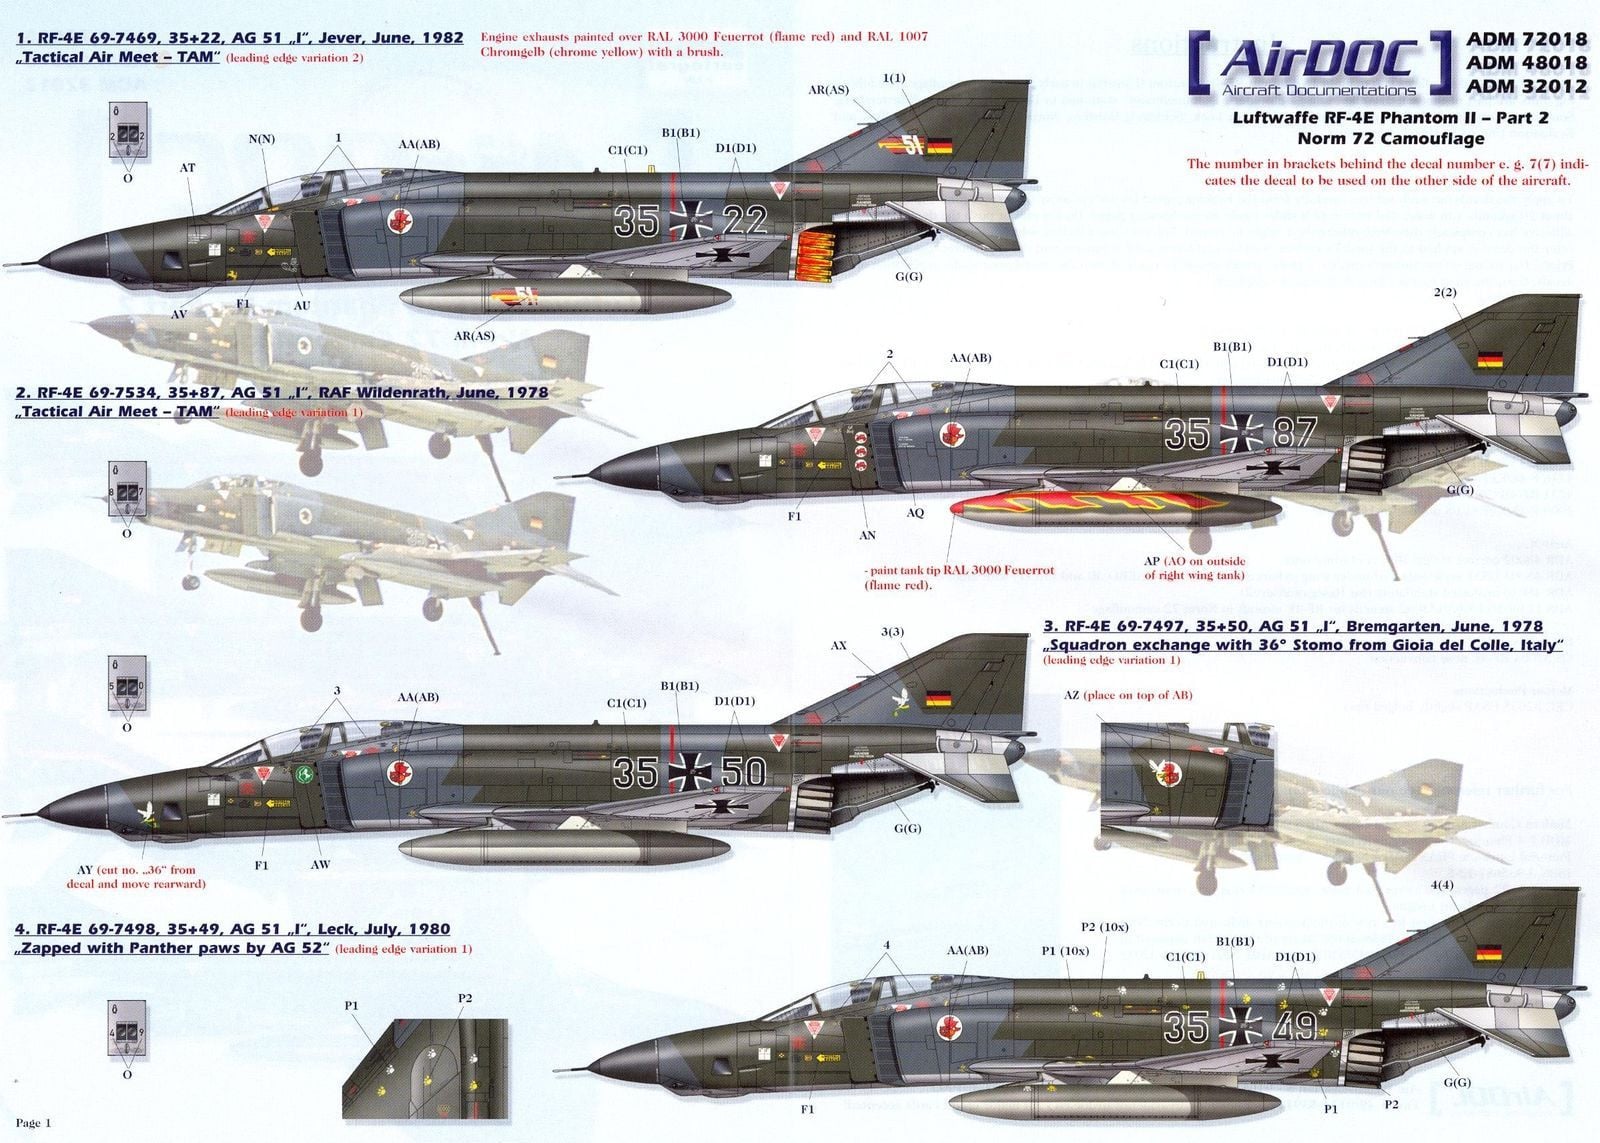 Airdoc ADM48018 1/48 McDonnell RF-4E Phantoms Luftwaffe Part 2 Model Decals - SGS Model Store